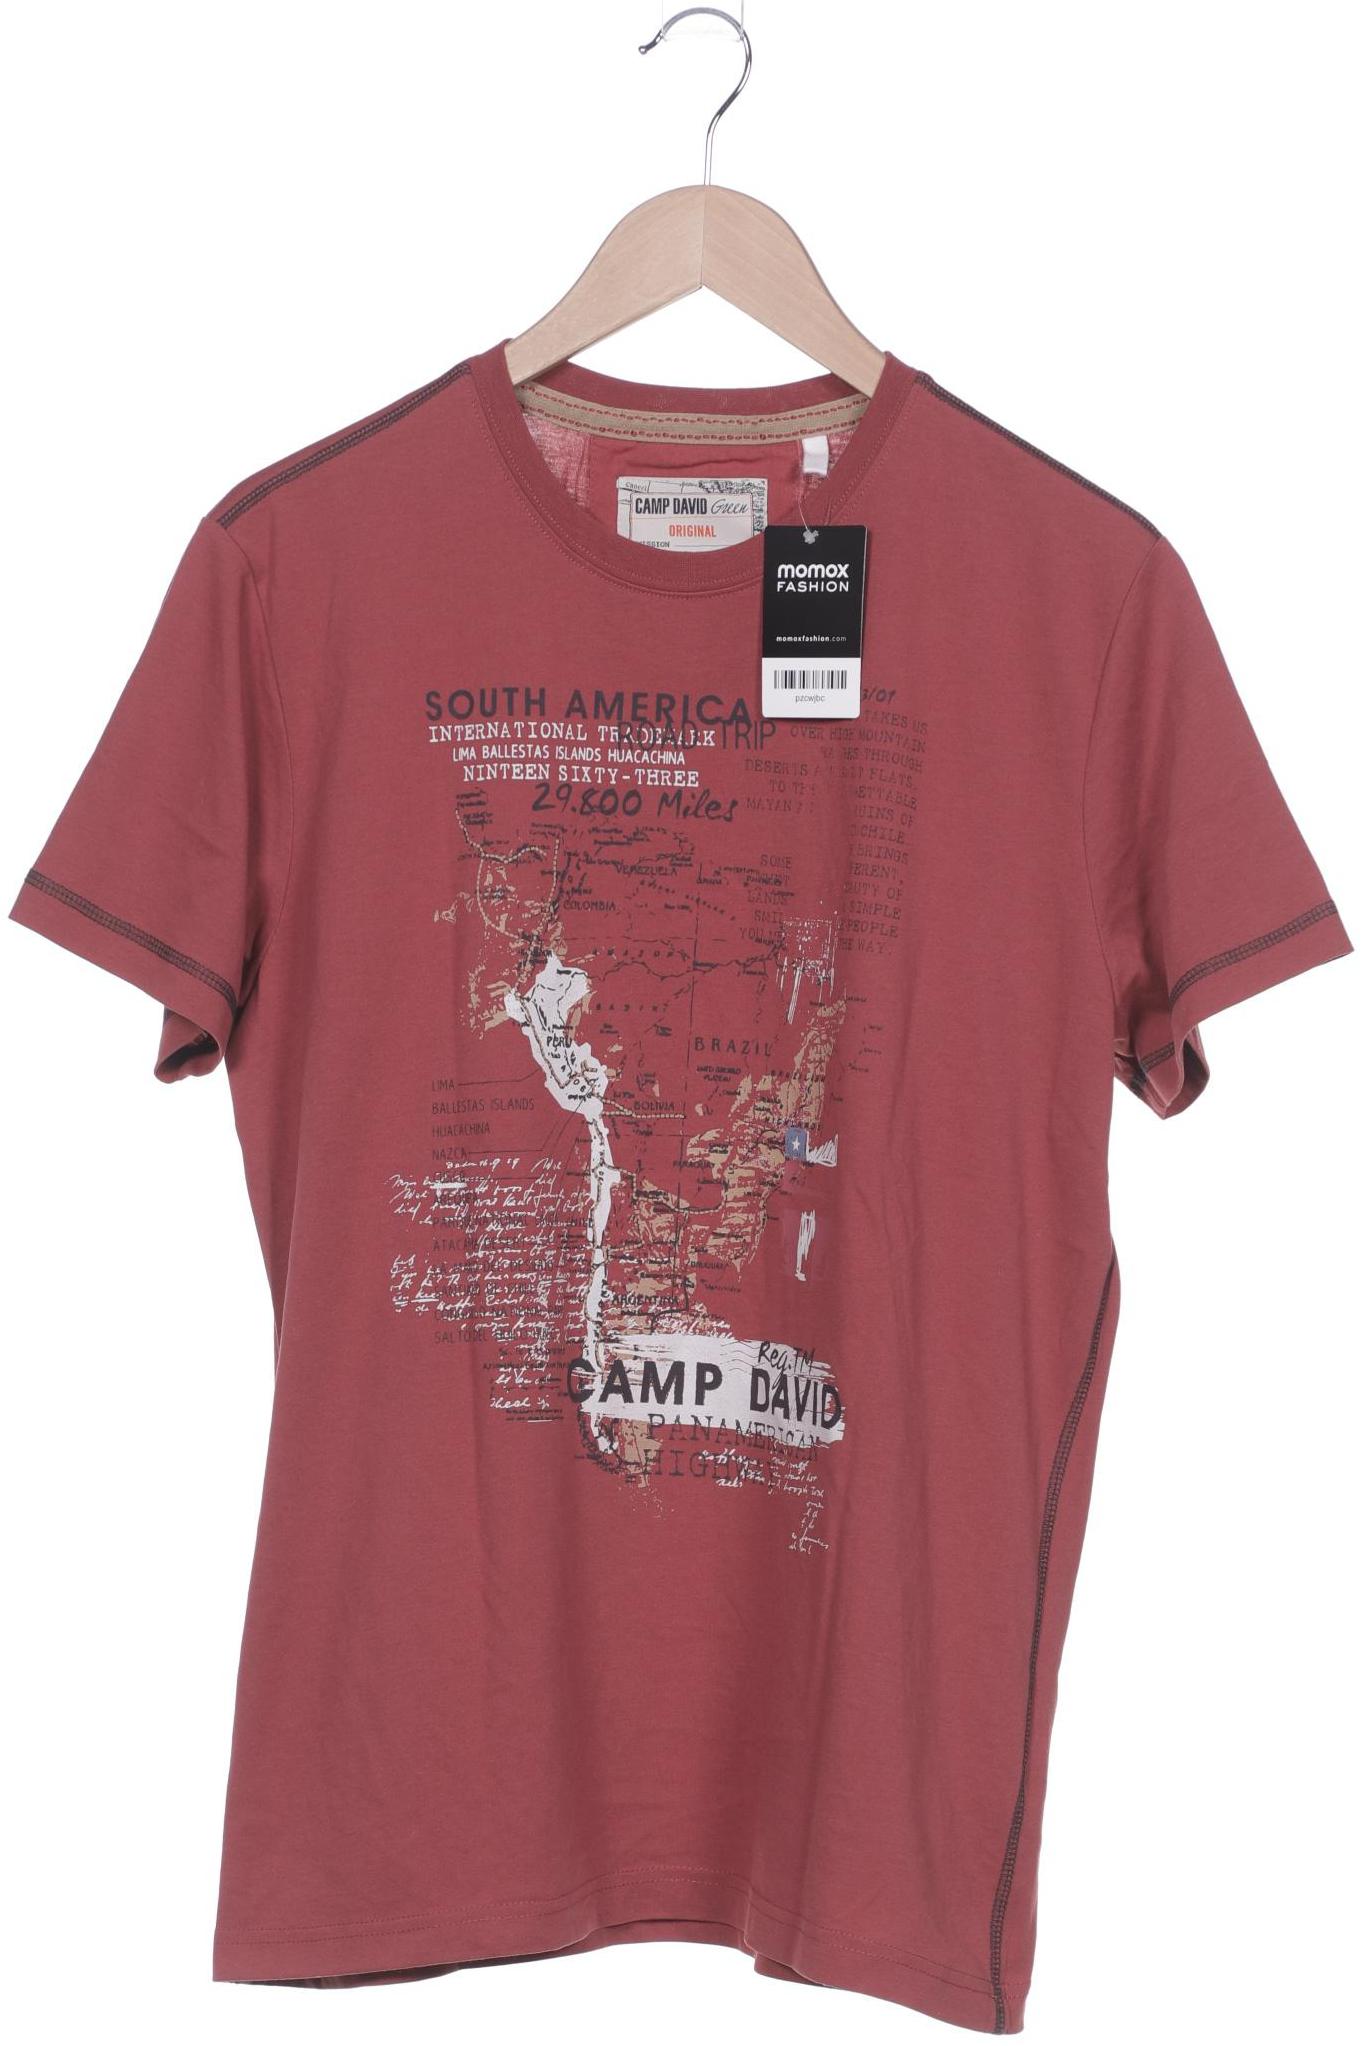 Camp David Herren T-Shirt, bordeaux von camp david